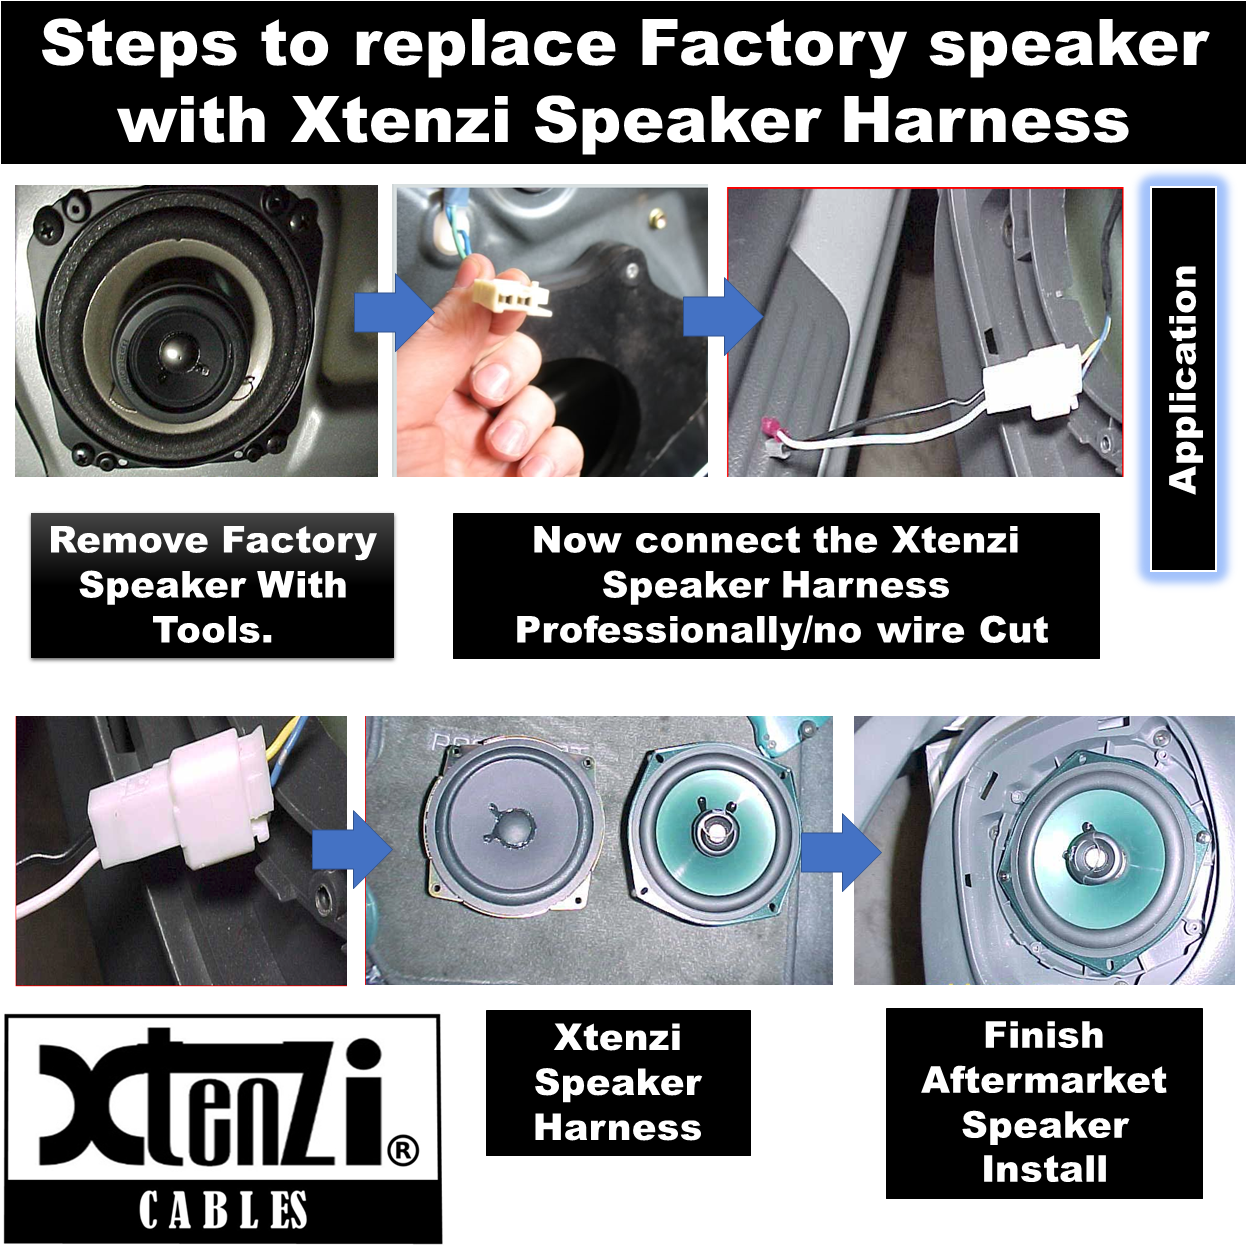 Xtenzi 2 Pair Car Audio Speaker Harness Set for Select Honda, Acura Vehicles